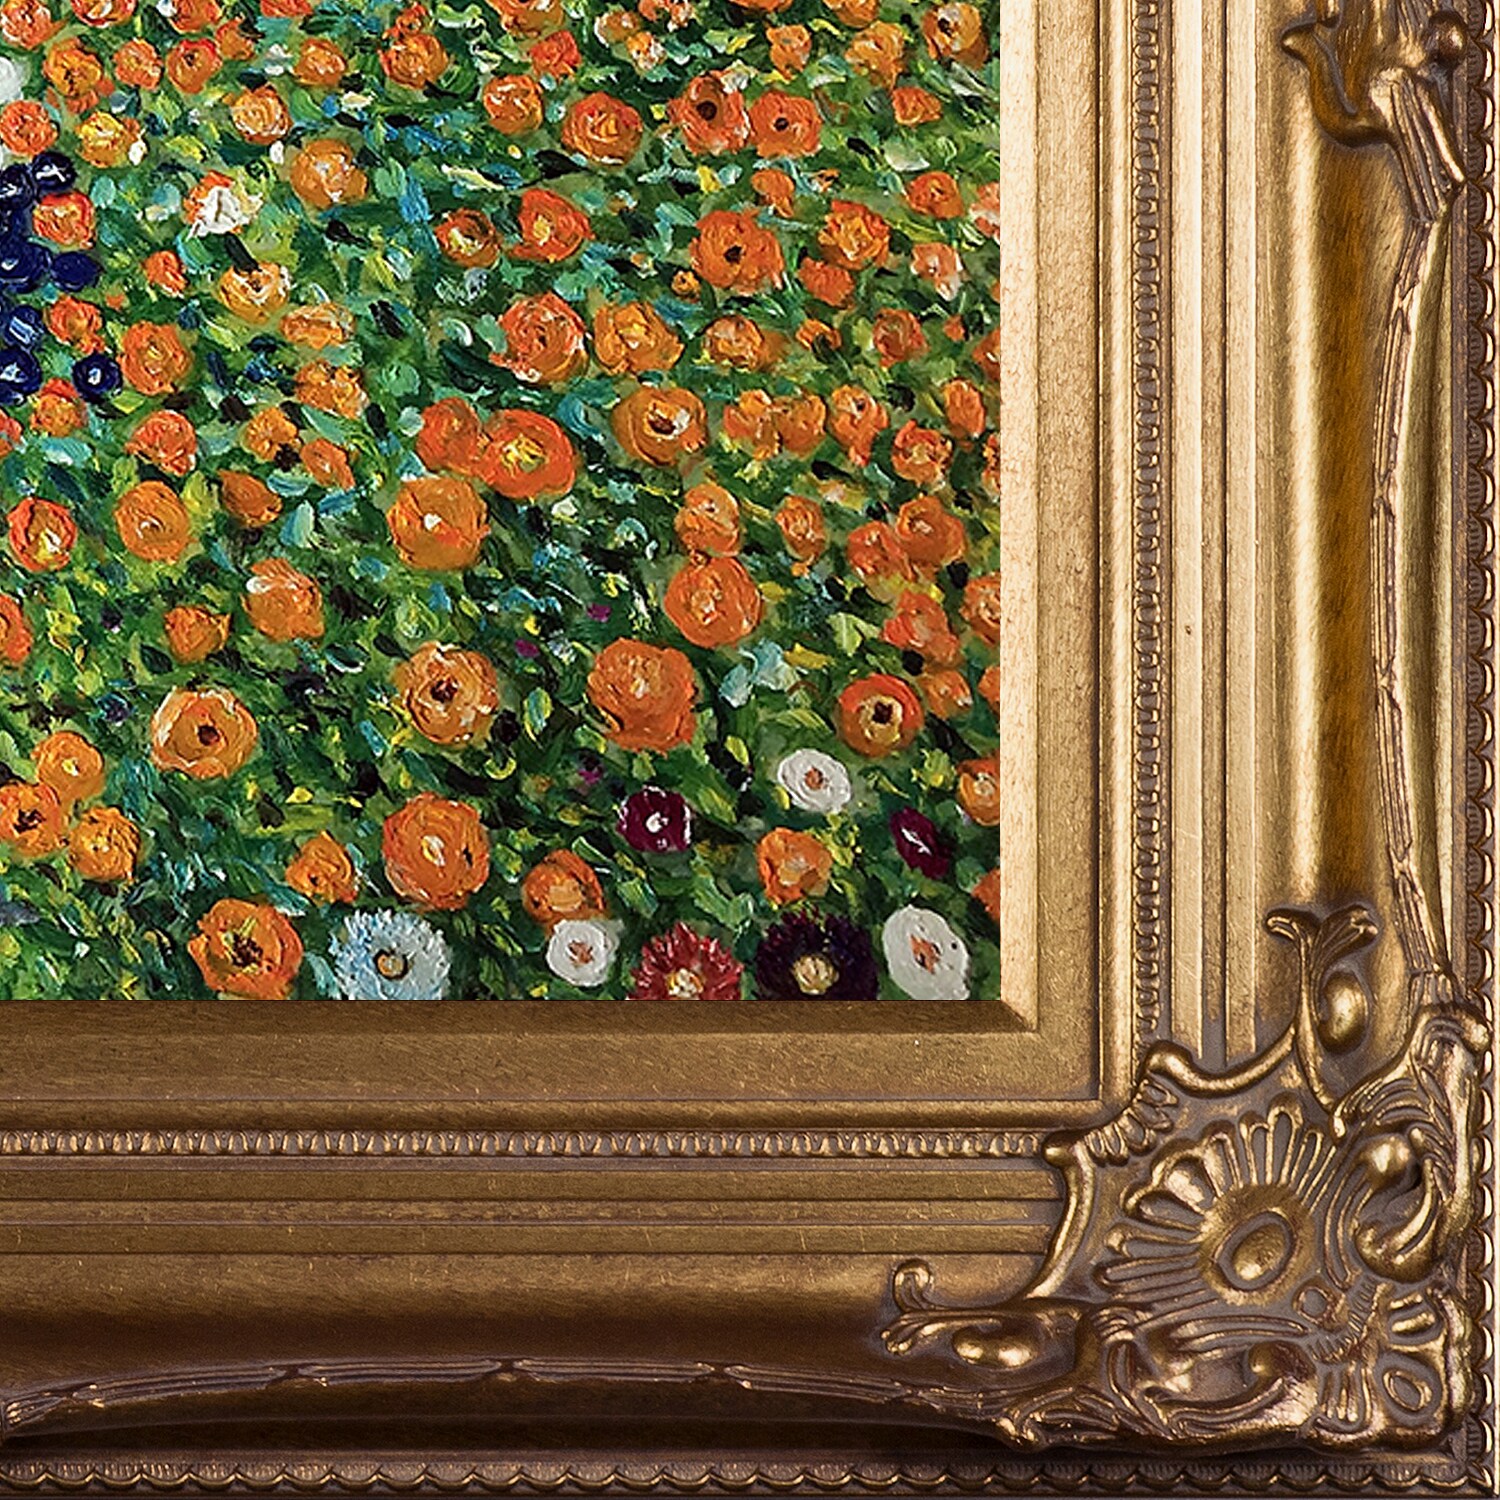 La Pastiche Flowers Multi-Color 1905 Framed Oil Painting